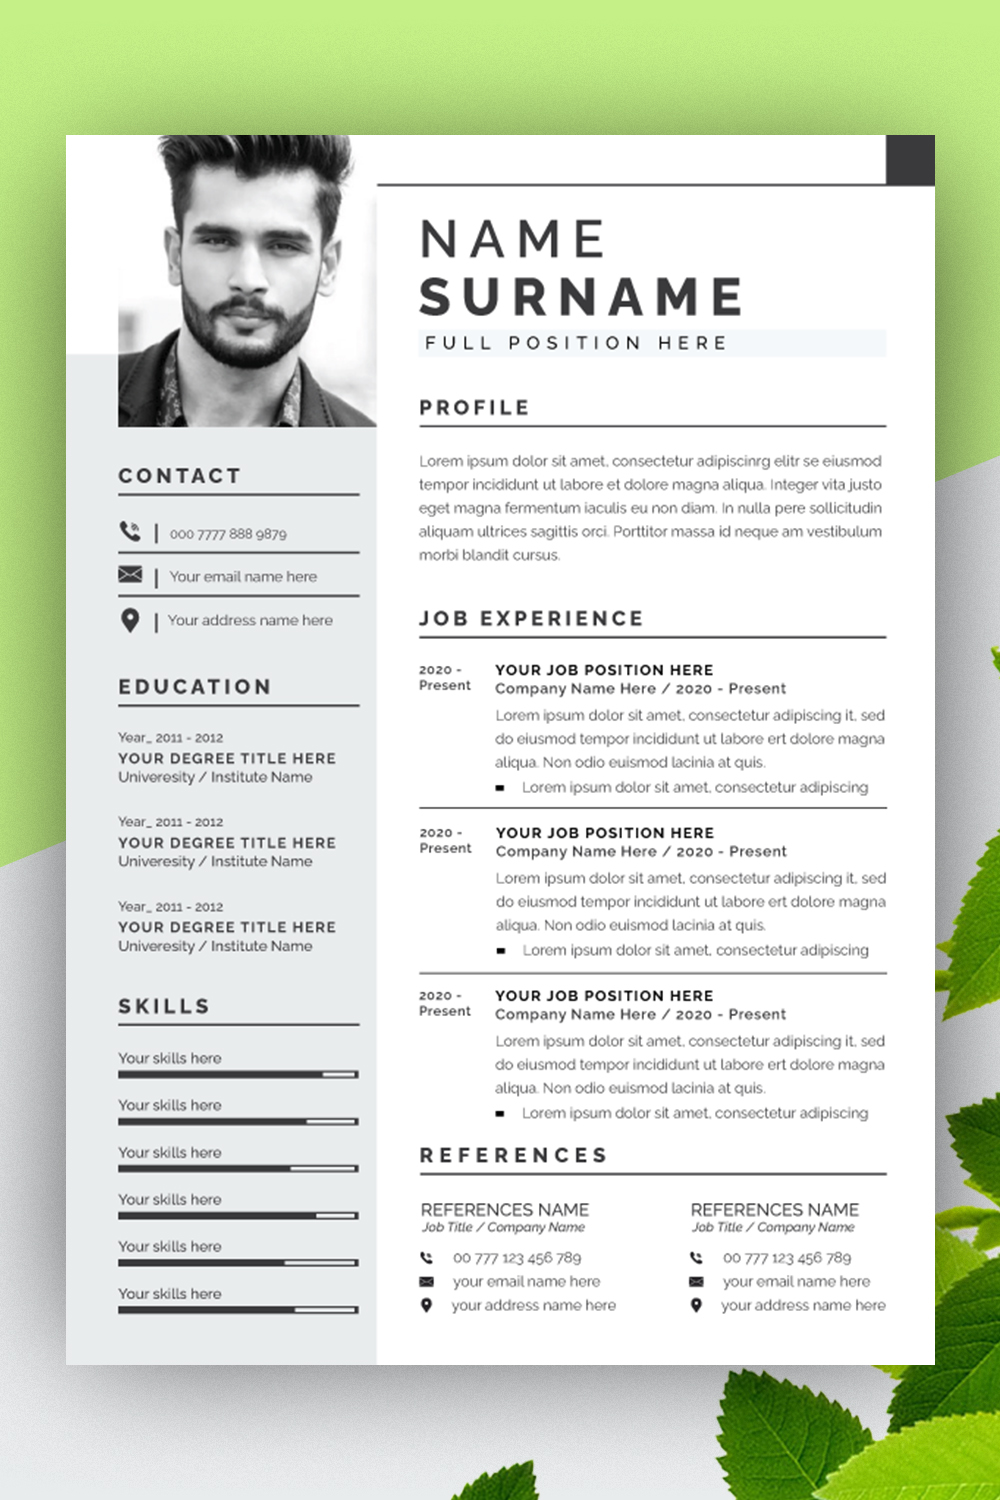 Resume Design Template Black & White pinterest preview image.